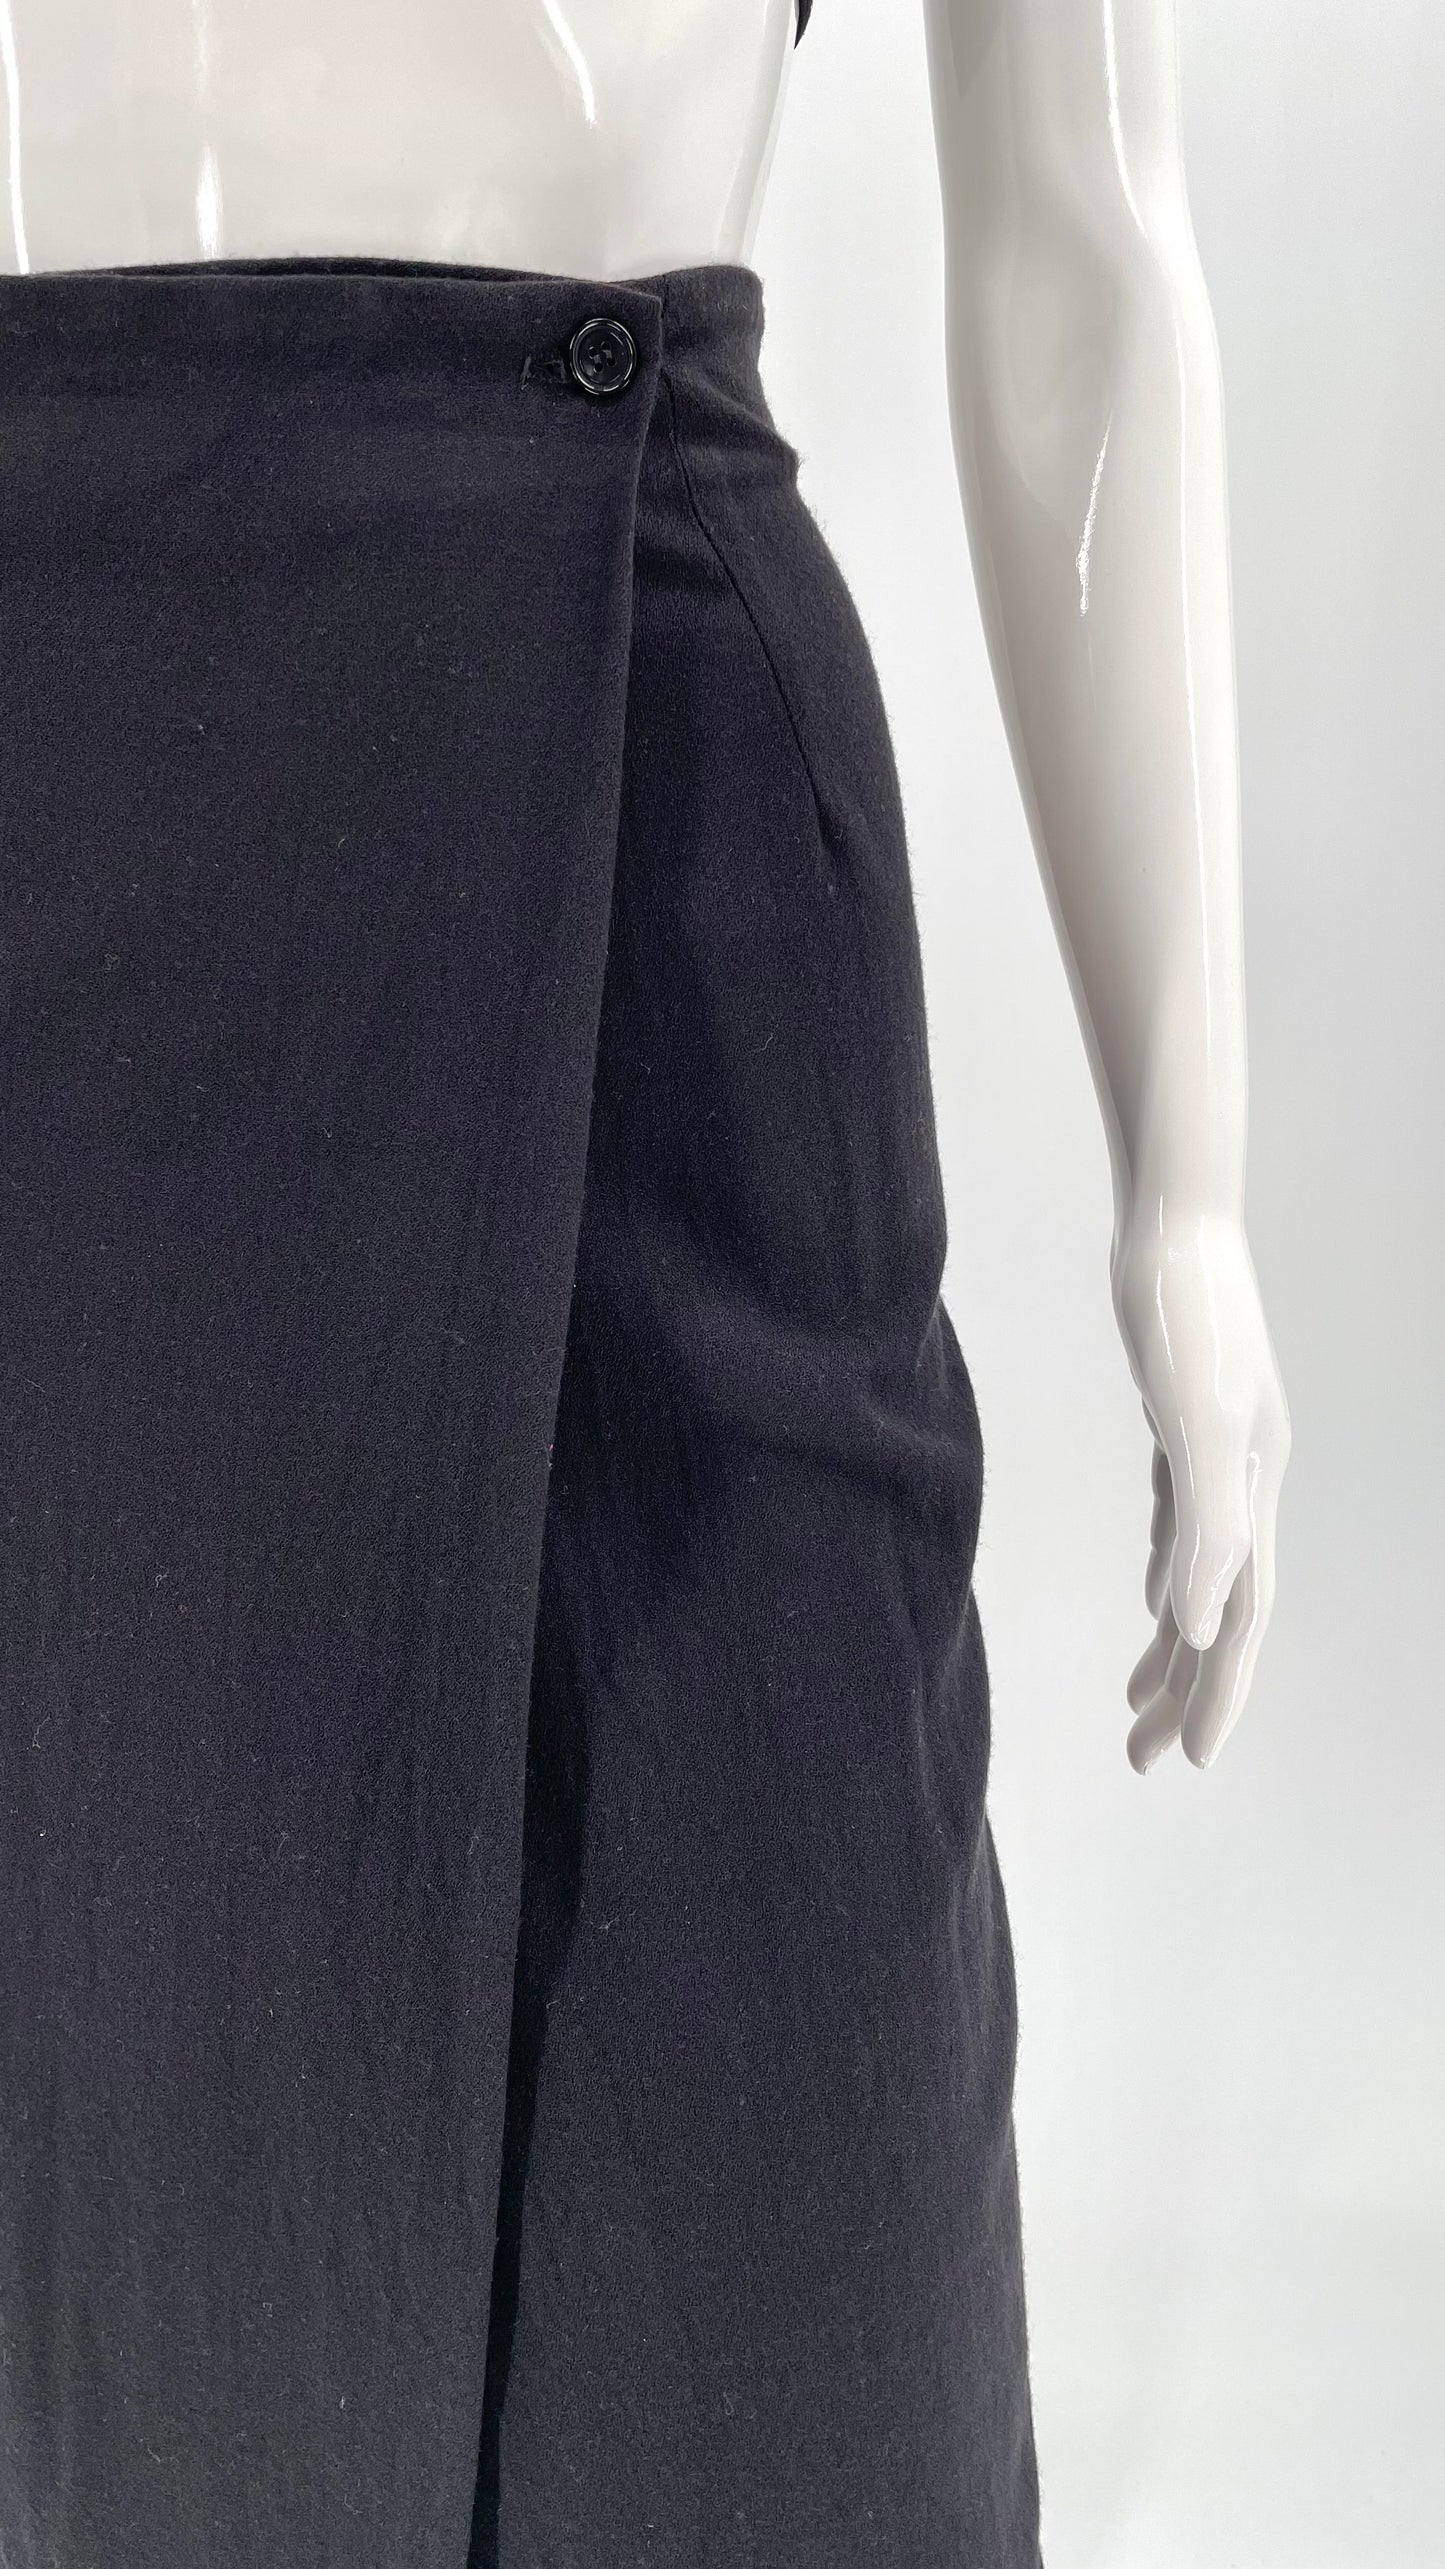 Vintage 90s black wrap midi skirt - Size 8